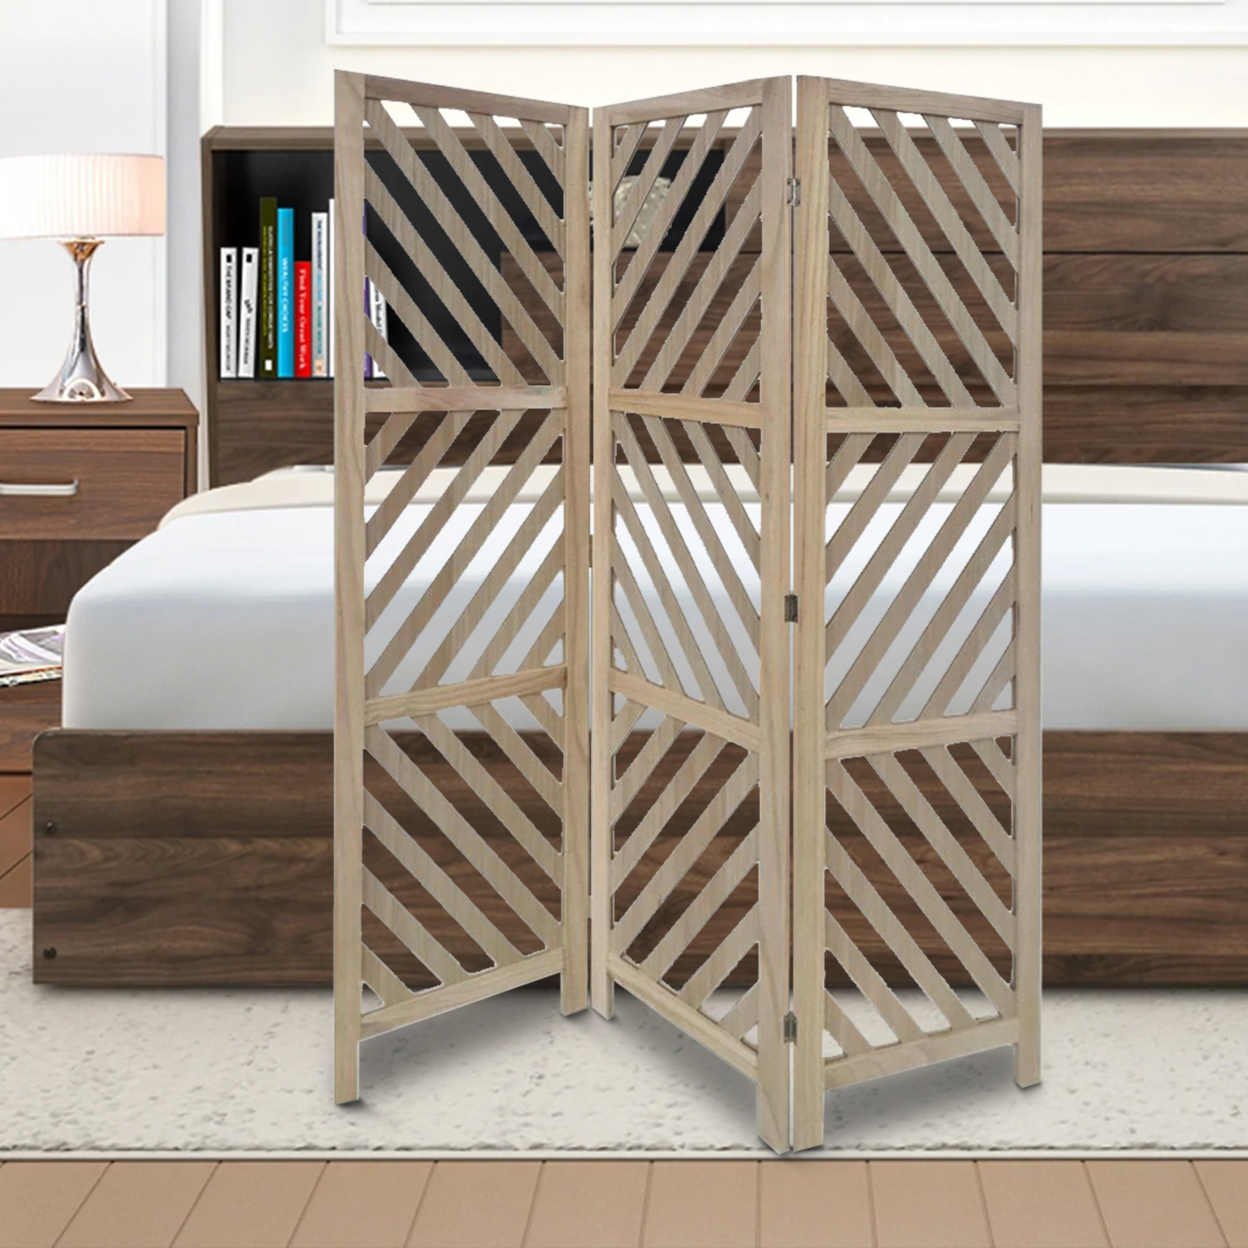 3 Panel Wooden Frame Screen With Diagonal Cut Slats, Natural Brown- Saltoro Sherpi